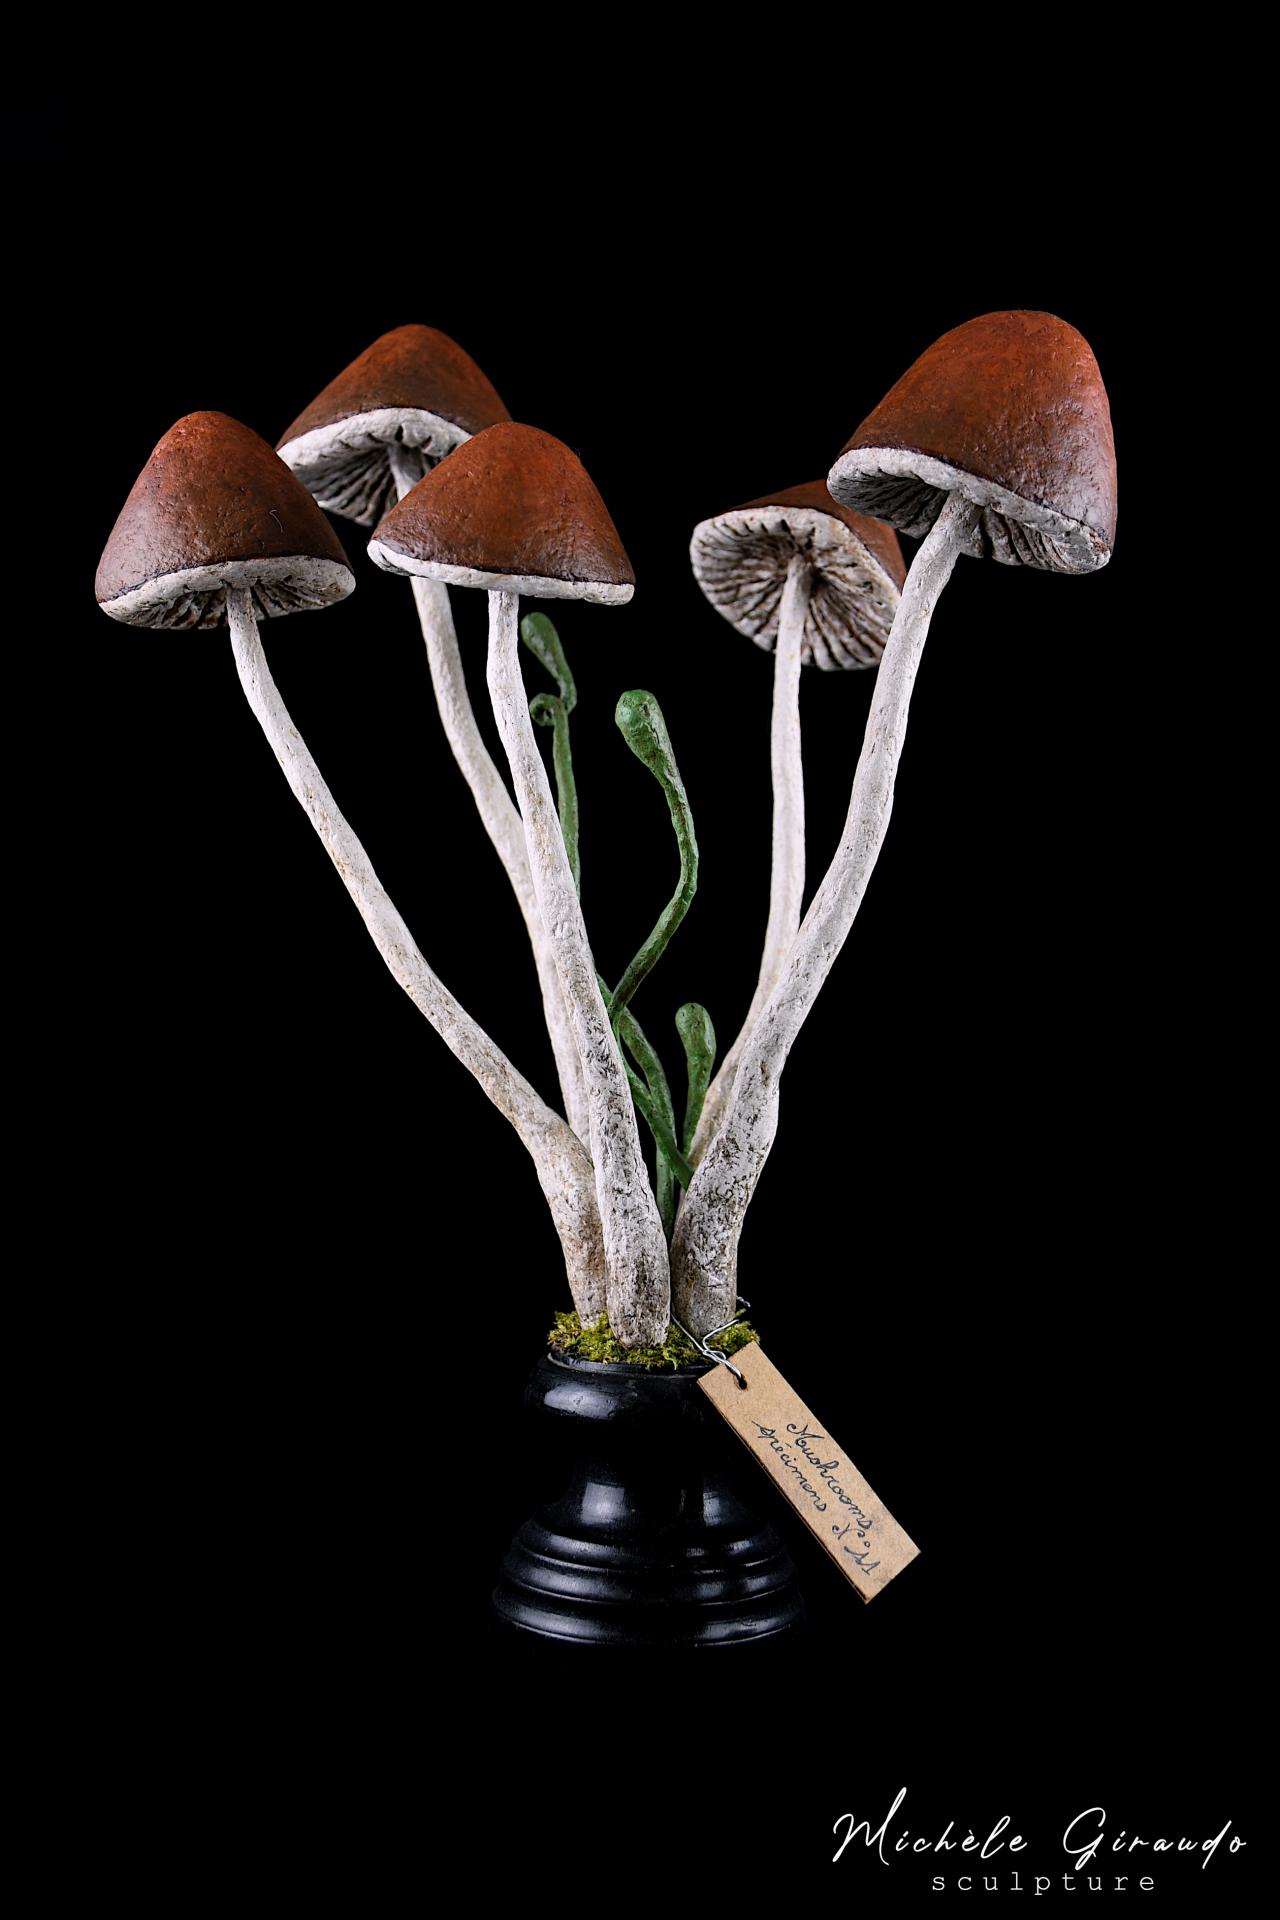 Mushrooms specimens n 11 de michele giraudo 1